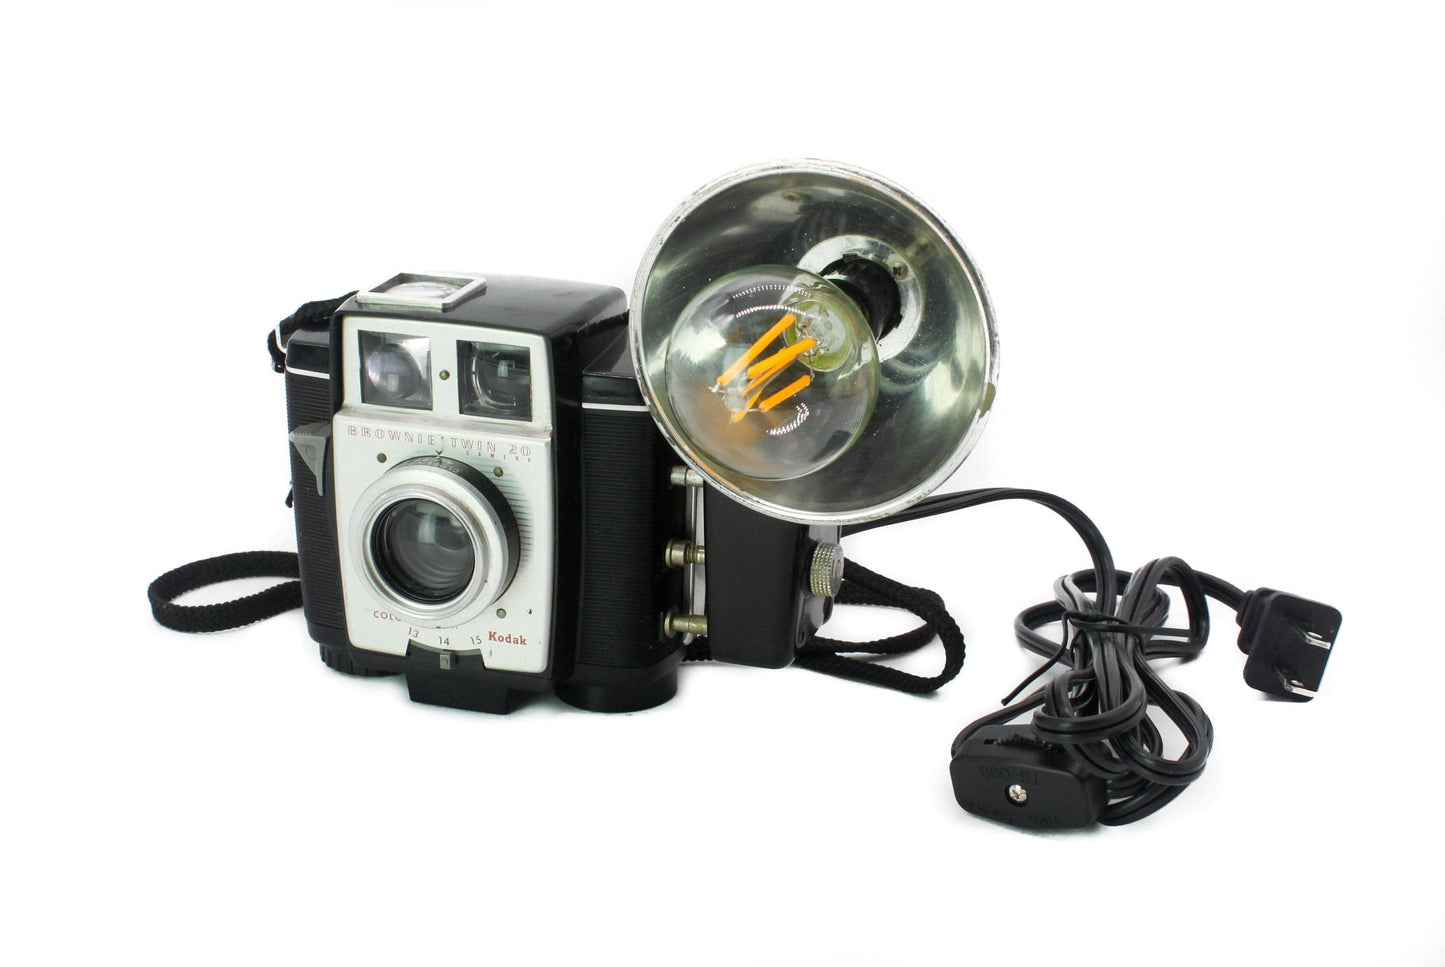 LightAndTimeArt Camera Lamp Reading Lamp - Kodak Brownie Twin 20 Vintage Camera - Vintage Desk lamp - photographer gift